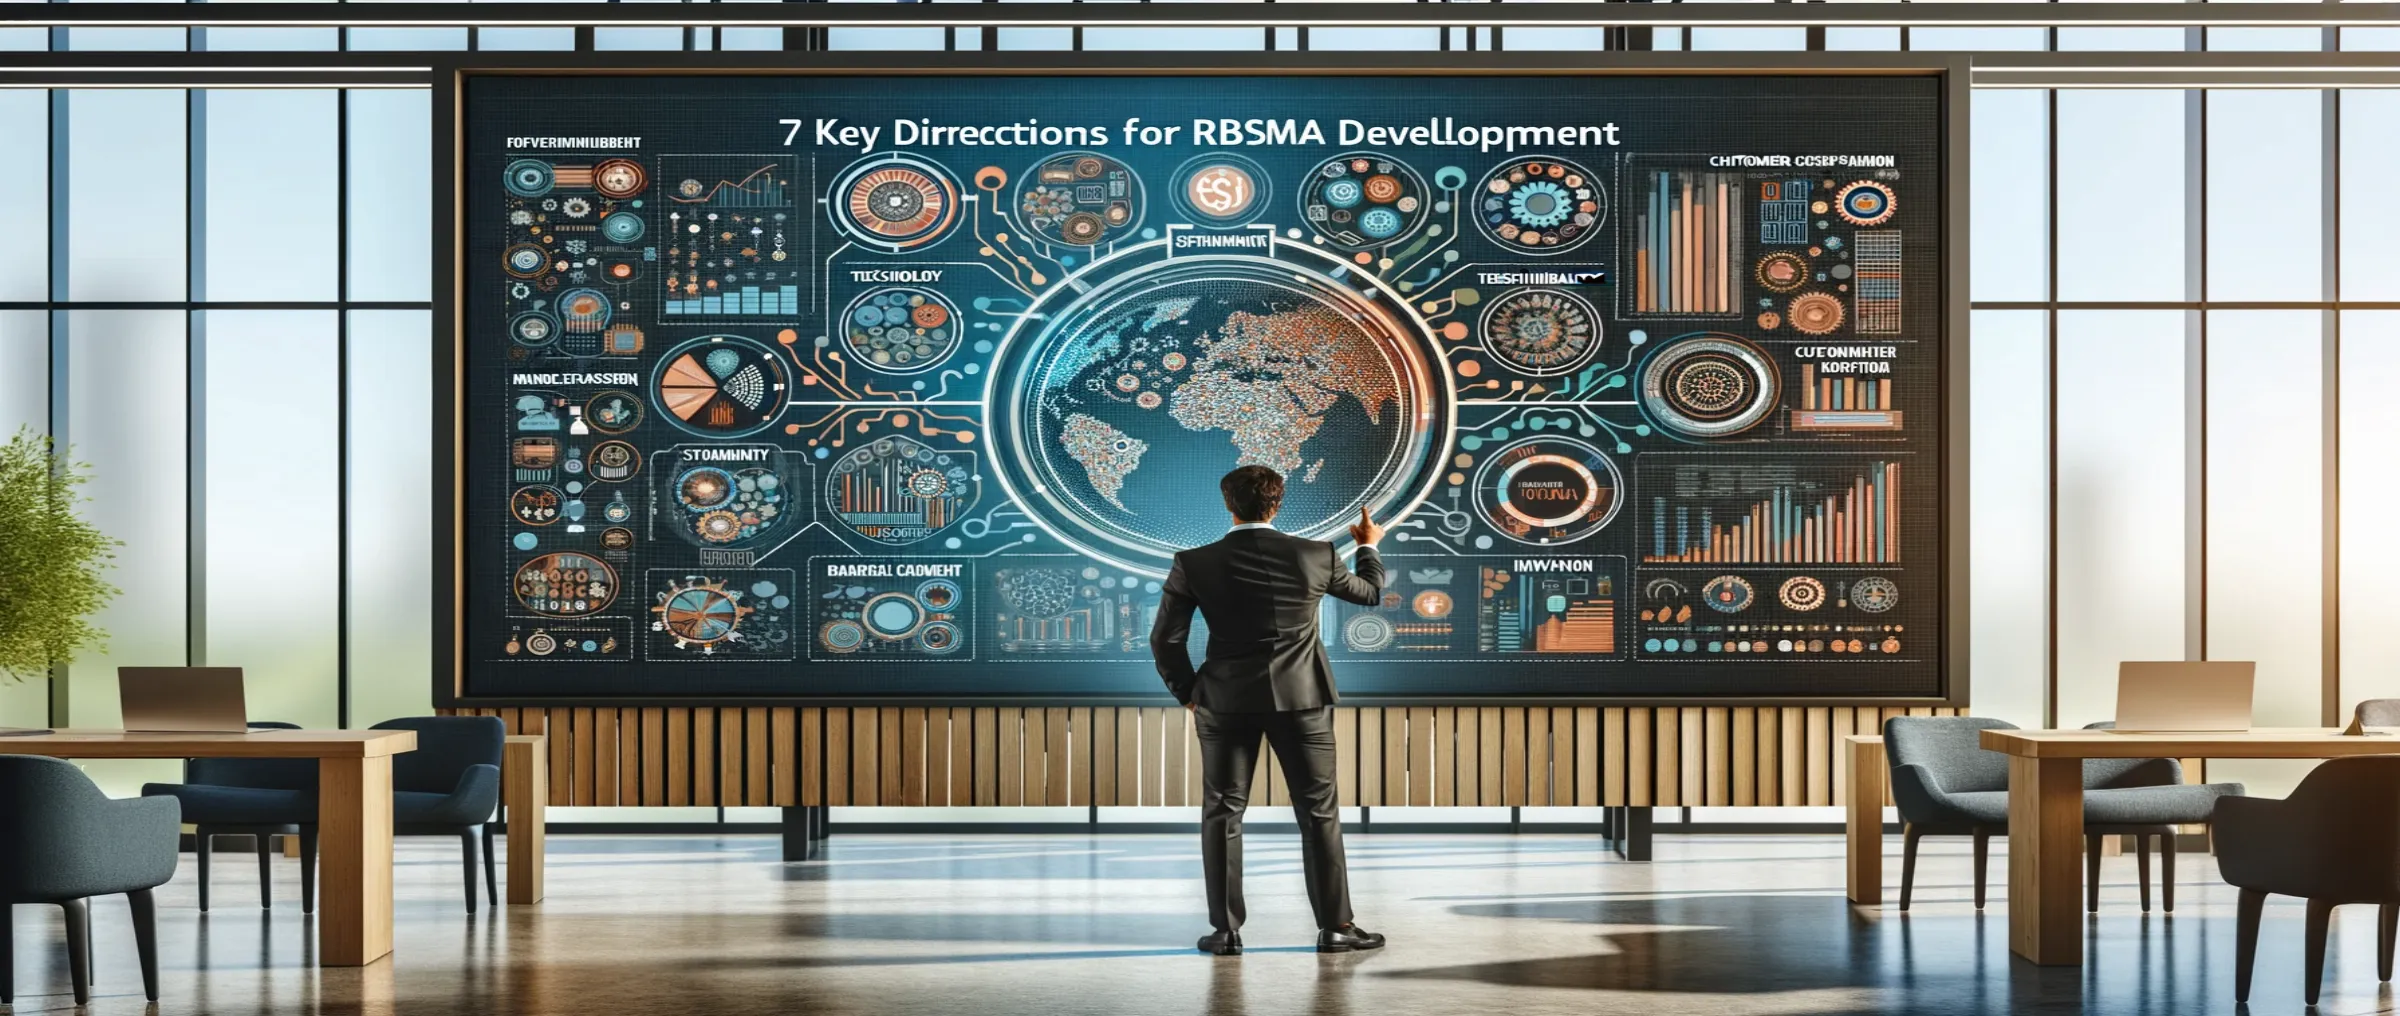 The analyst identified 7 key areas of RWA development